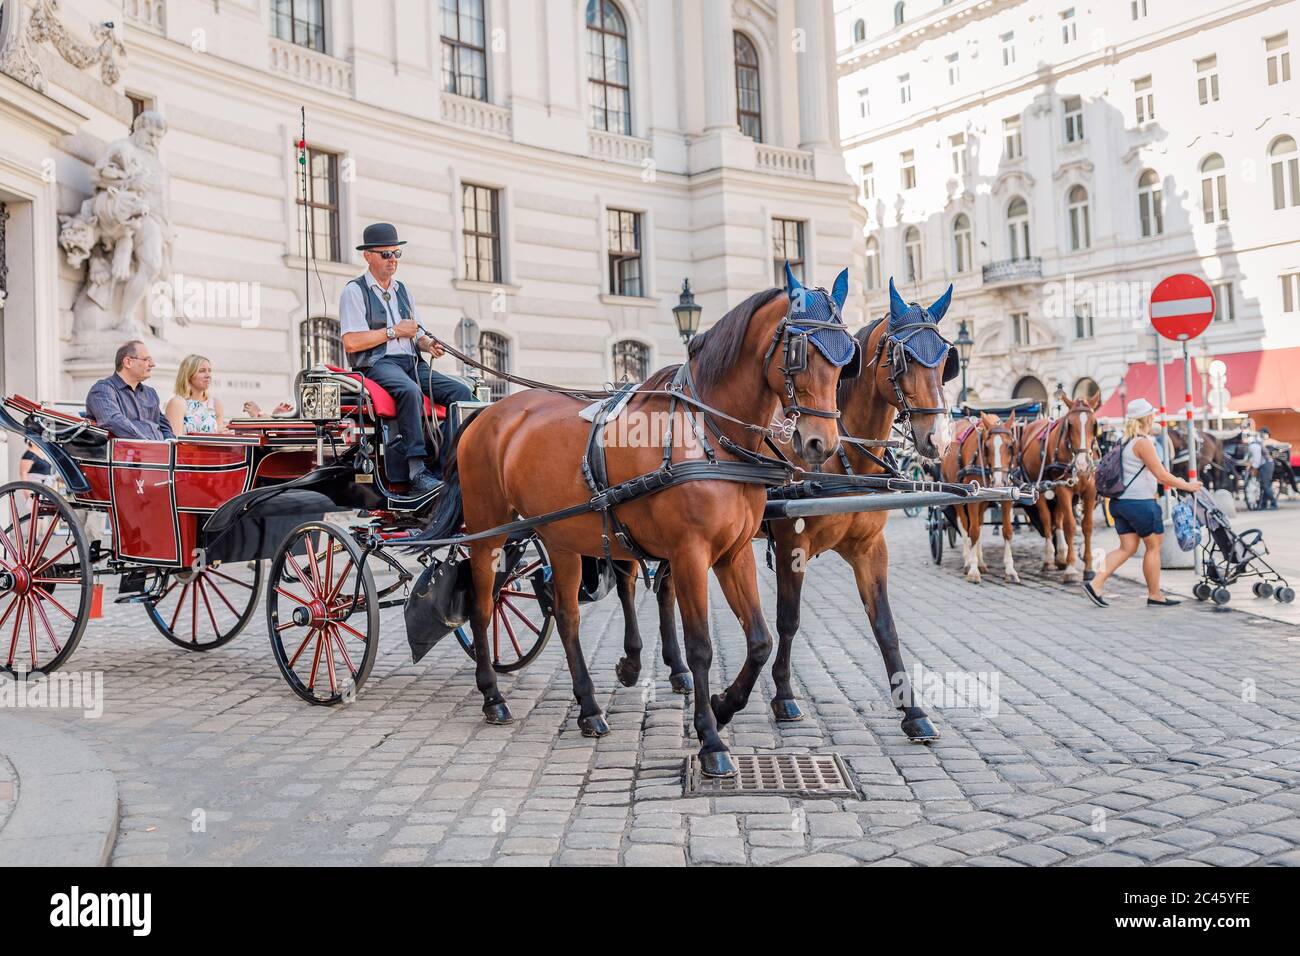 Fiaker - hackney-Kutsche, Kutsche von zwei Pferden in Wien gezogen Stockfoto